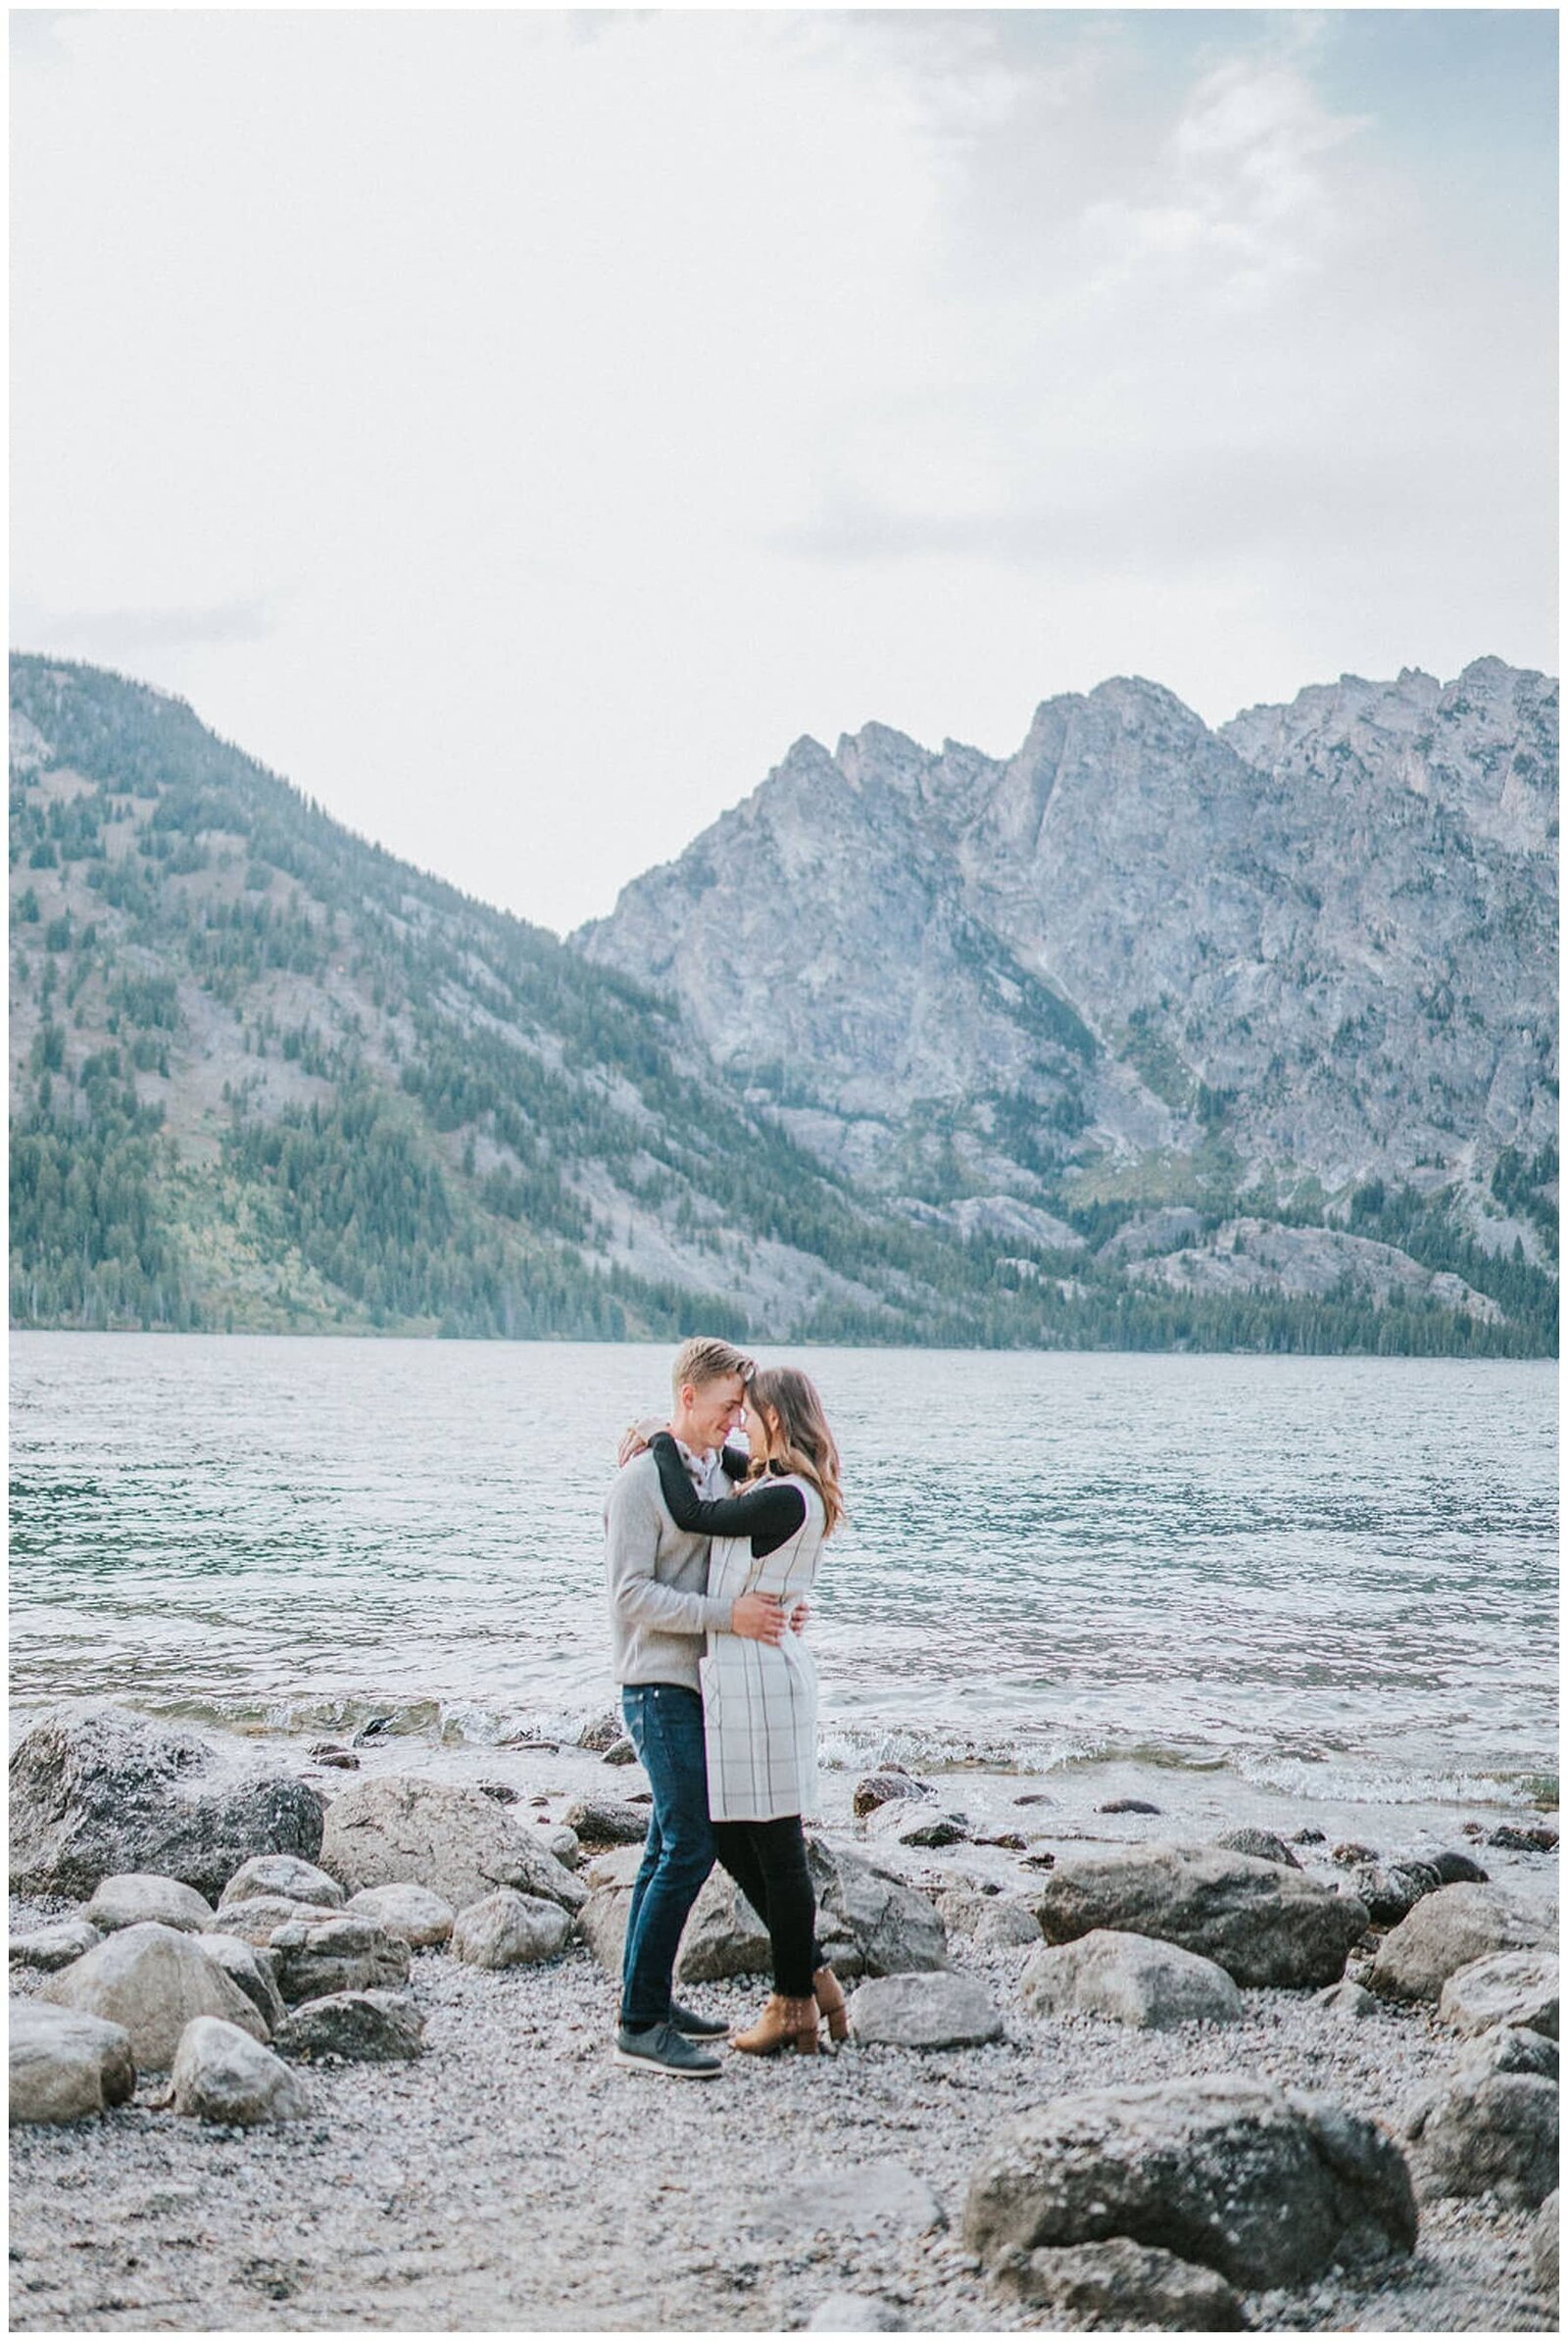 Lake Tahoe wedding photographer captures newly engaged couple in Lake Tahoe hugging